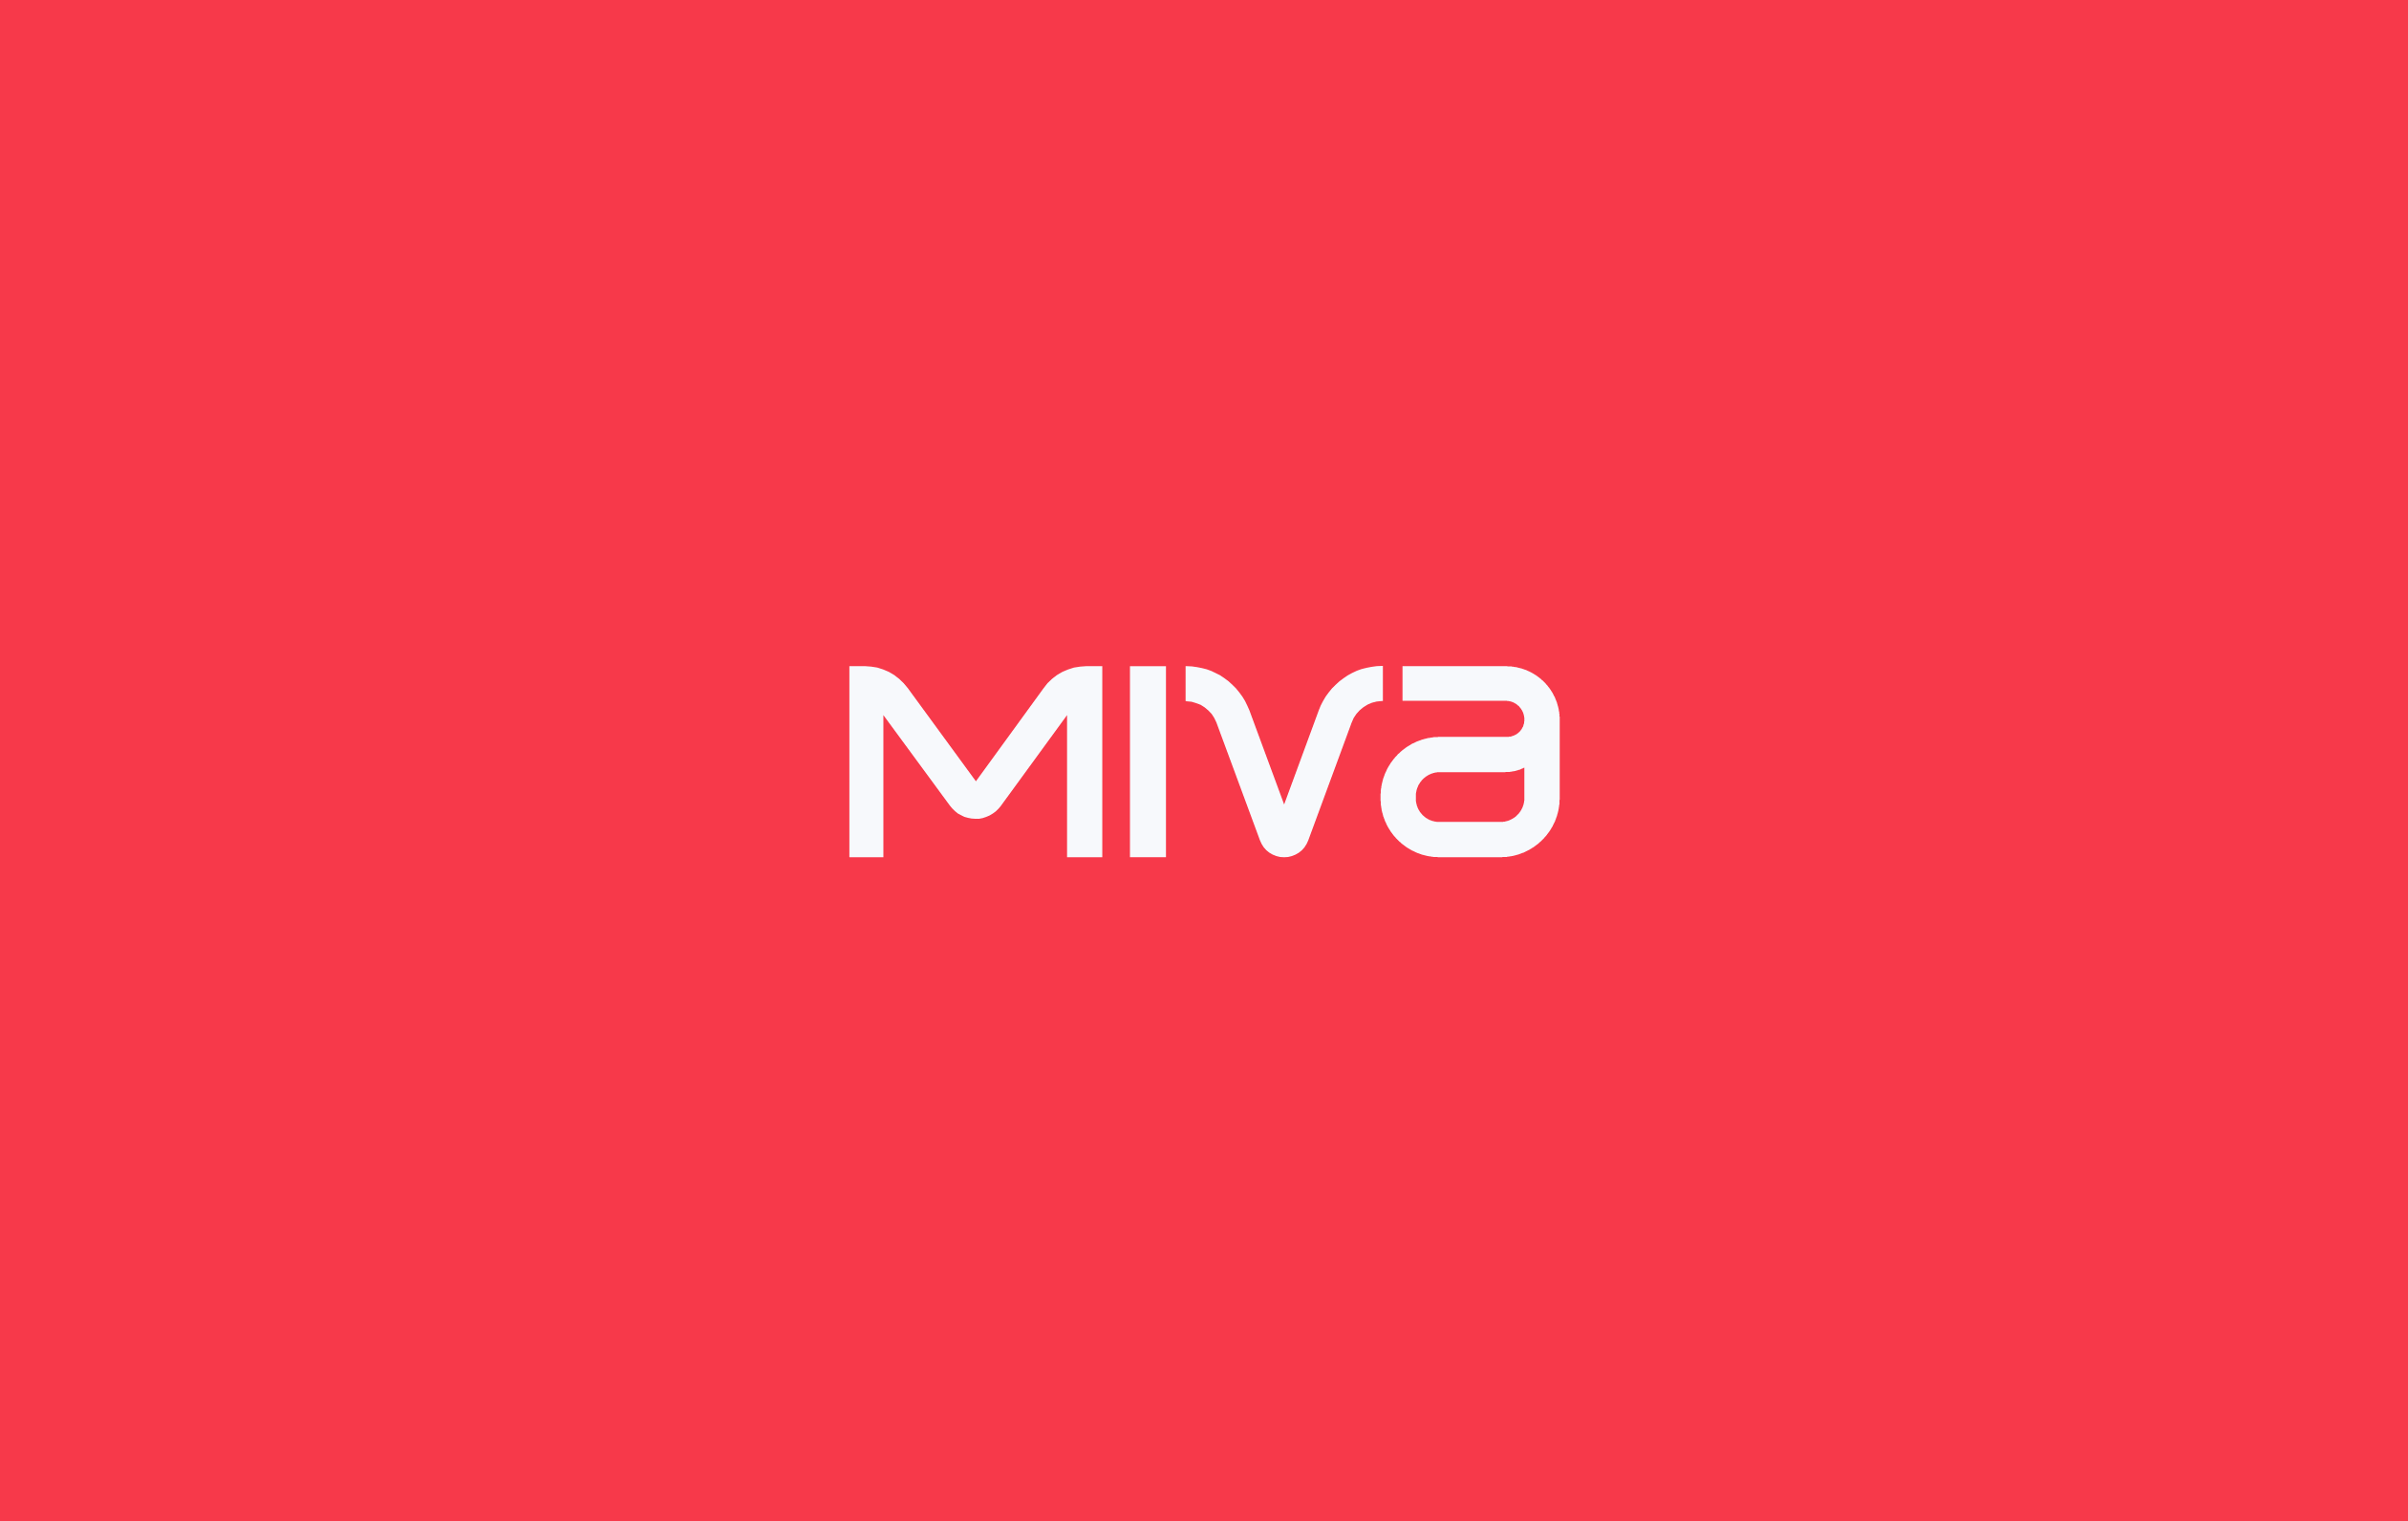 Miva logo on red background